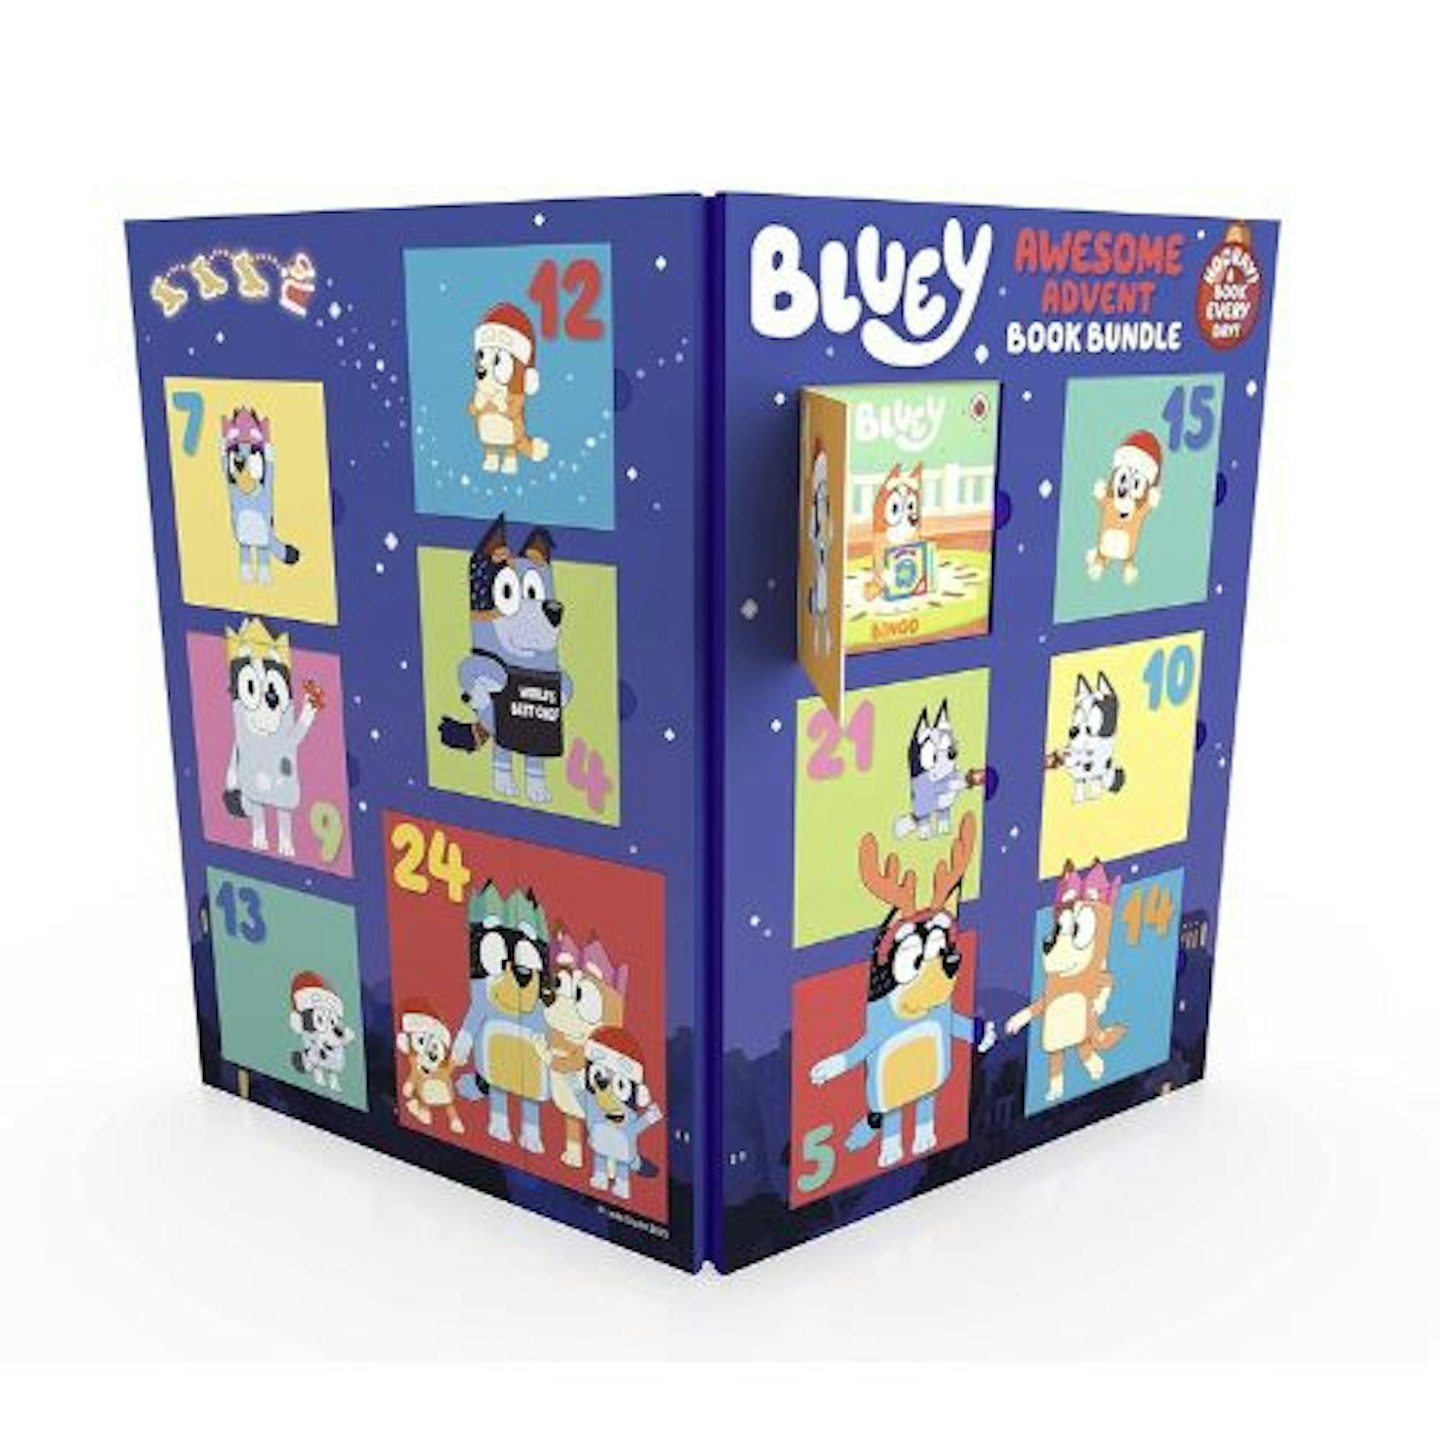 Best Disney Advent calendars Bluey: Awesome Advent Book Bundle